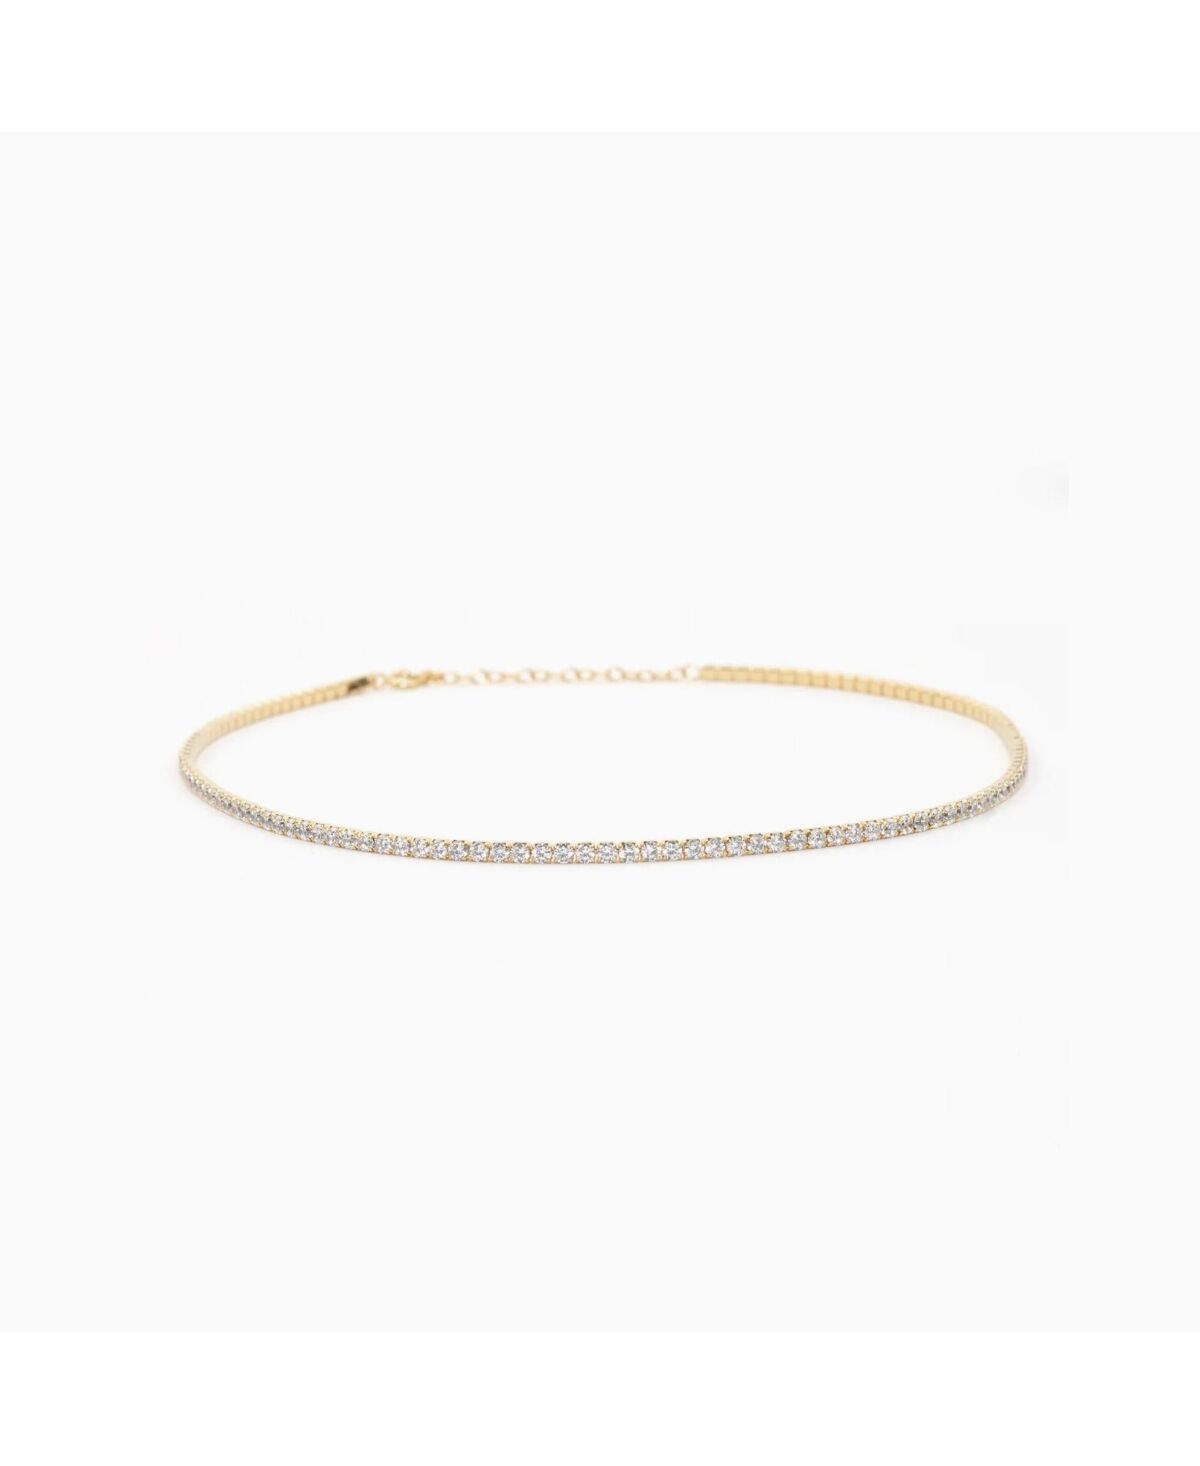 Bearfruit Jewelry Cherie Tennis Necklace - Gold